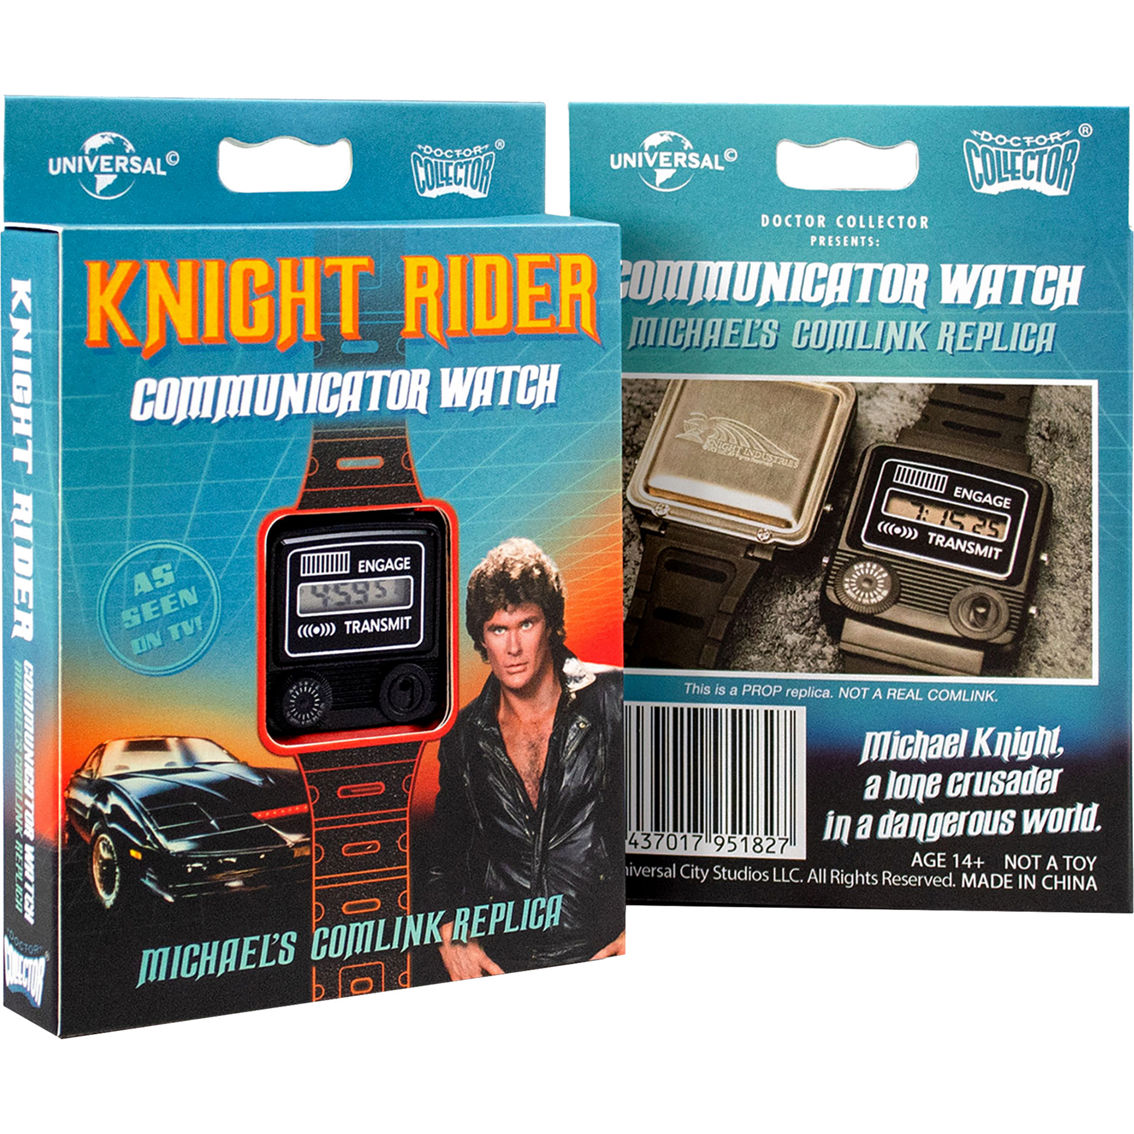 Knight Rider: Communicator Watch - Image 3 of 6